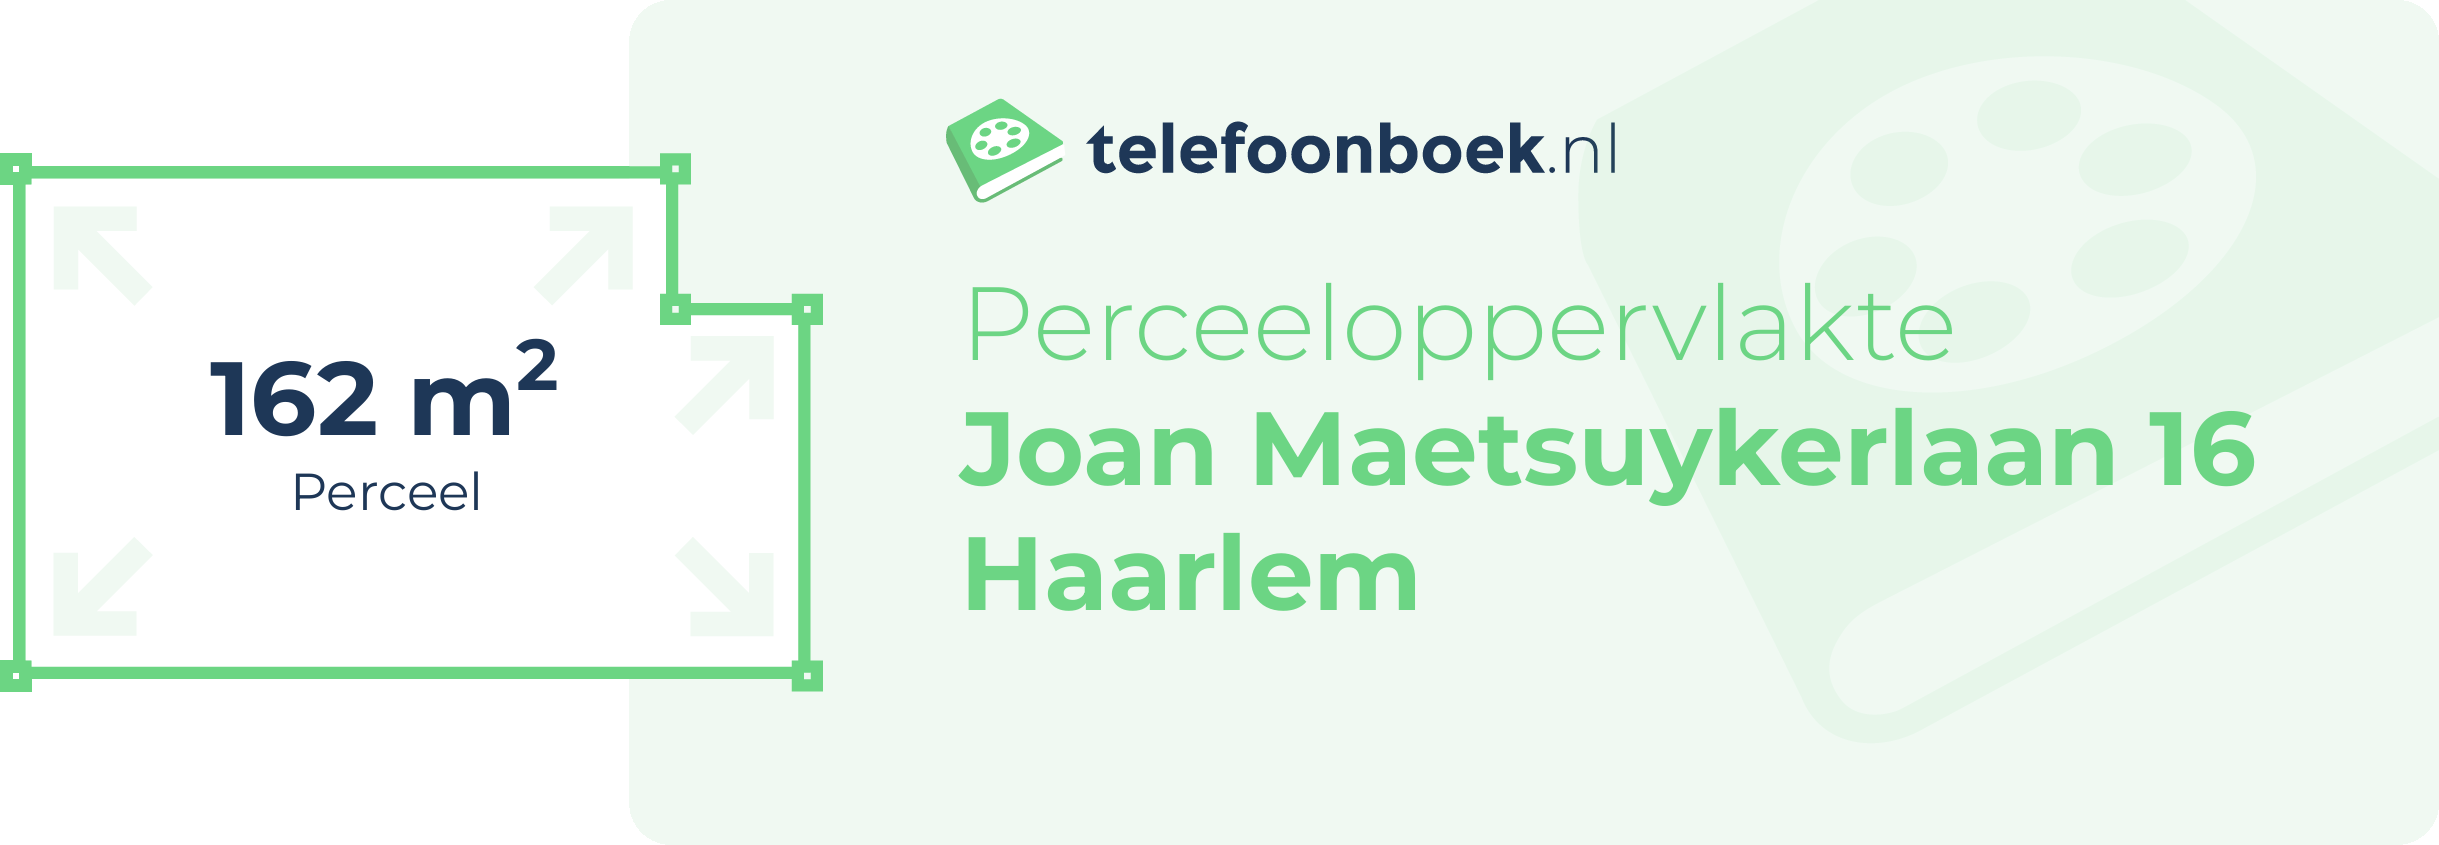 Perceeloppervlakte Joan Maetsuykerlaan 16 Haarlem